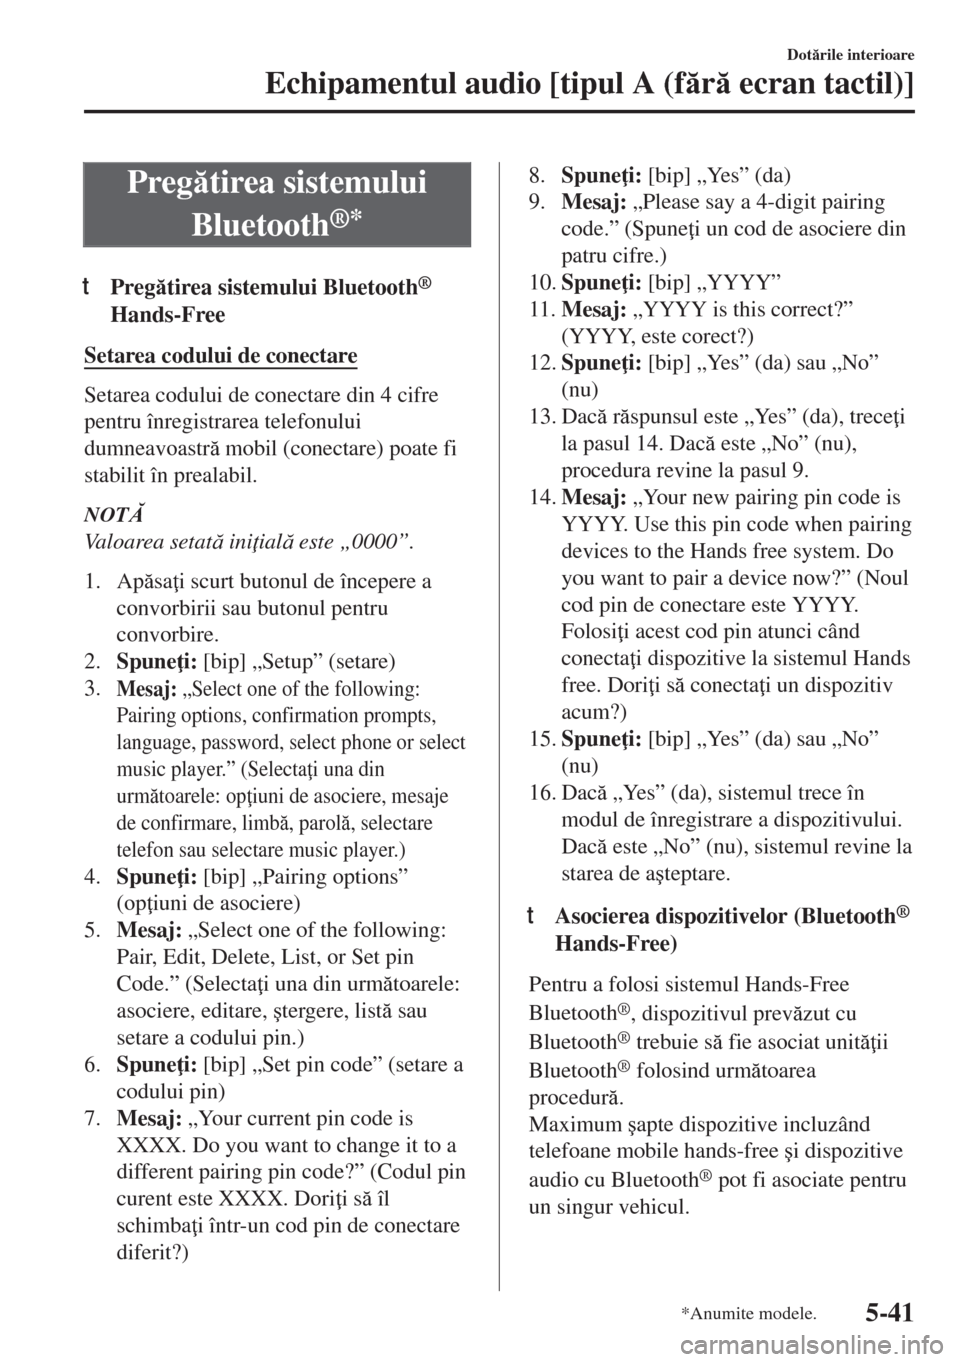 MAZDA MODEL 6 2018  Manualul de utilizare (in Romanian) Pregtirea sistemului
Bluetooth
®*
tPregtirea sistemului Bluetooth®
Hands-Free
Setarea codului de conectare
Setarea codului de conectare din 4 cifre
pentru înregistrarea telefonului
dumneavoastr